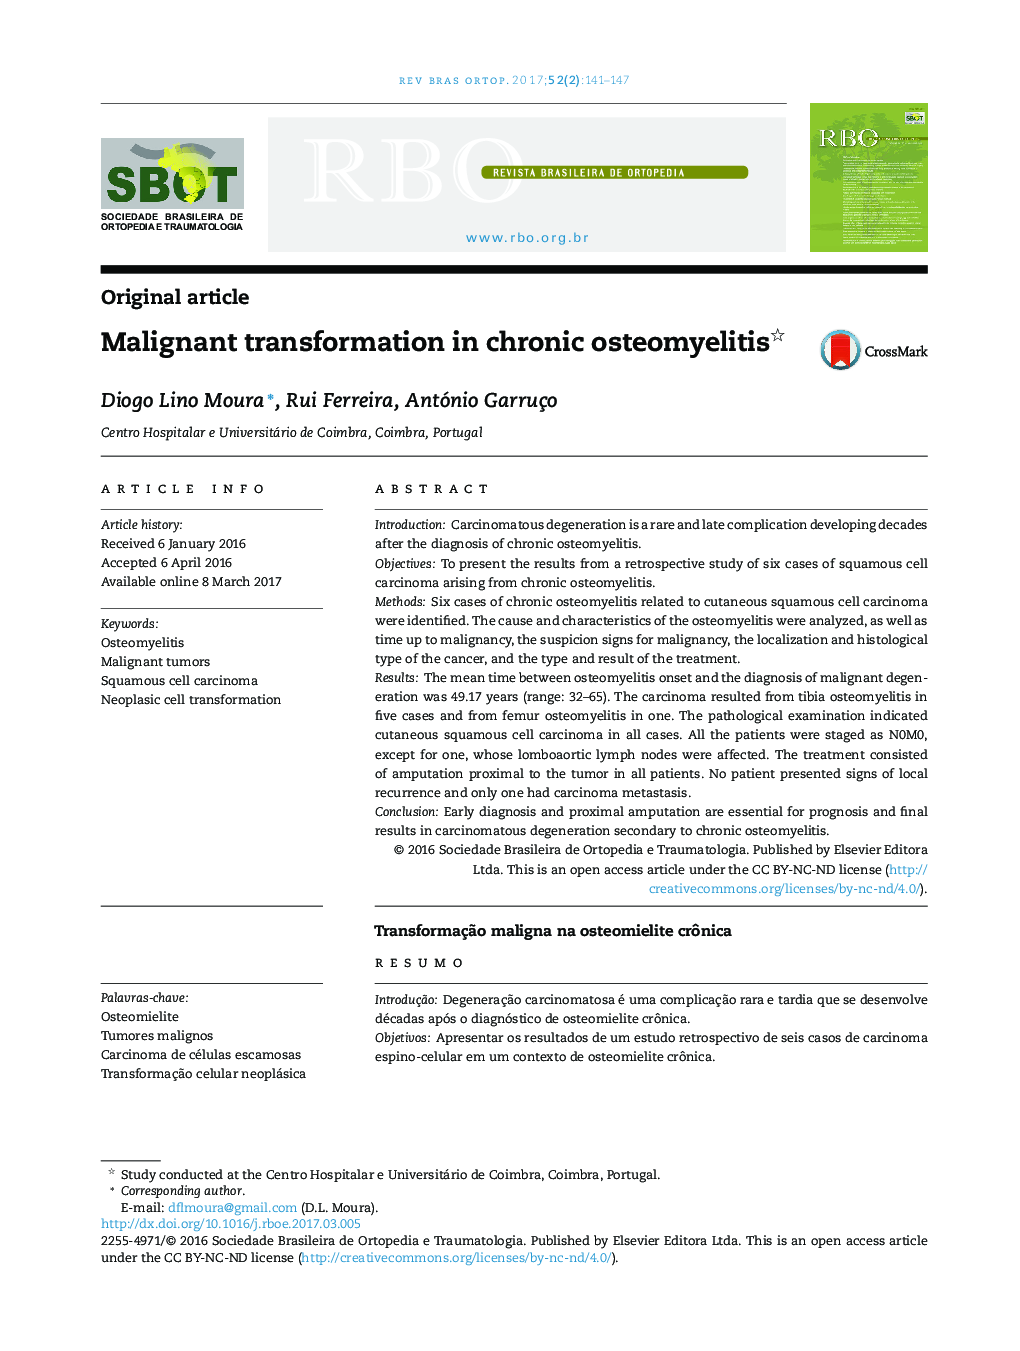 Malignant transformation in chronic osteomyelitis